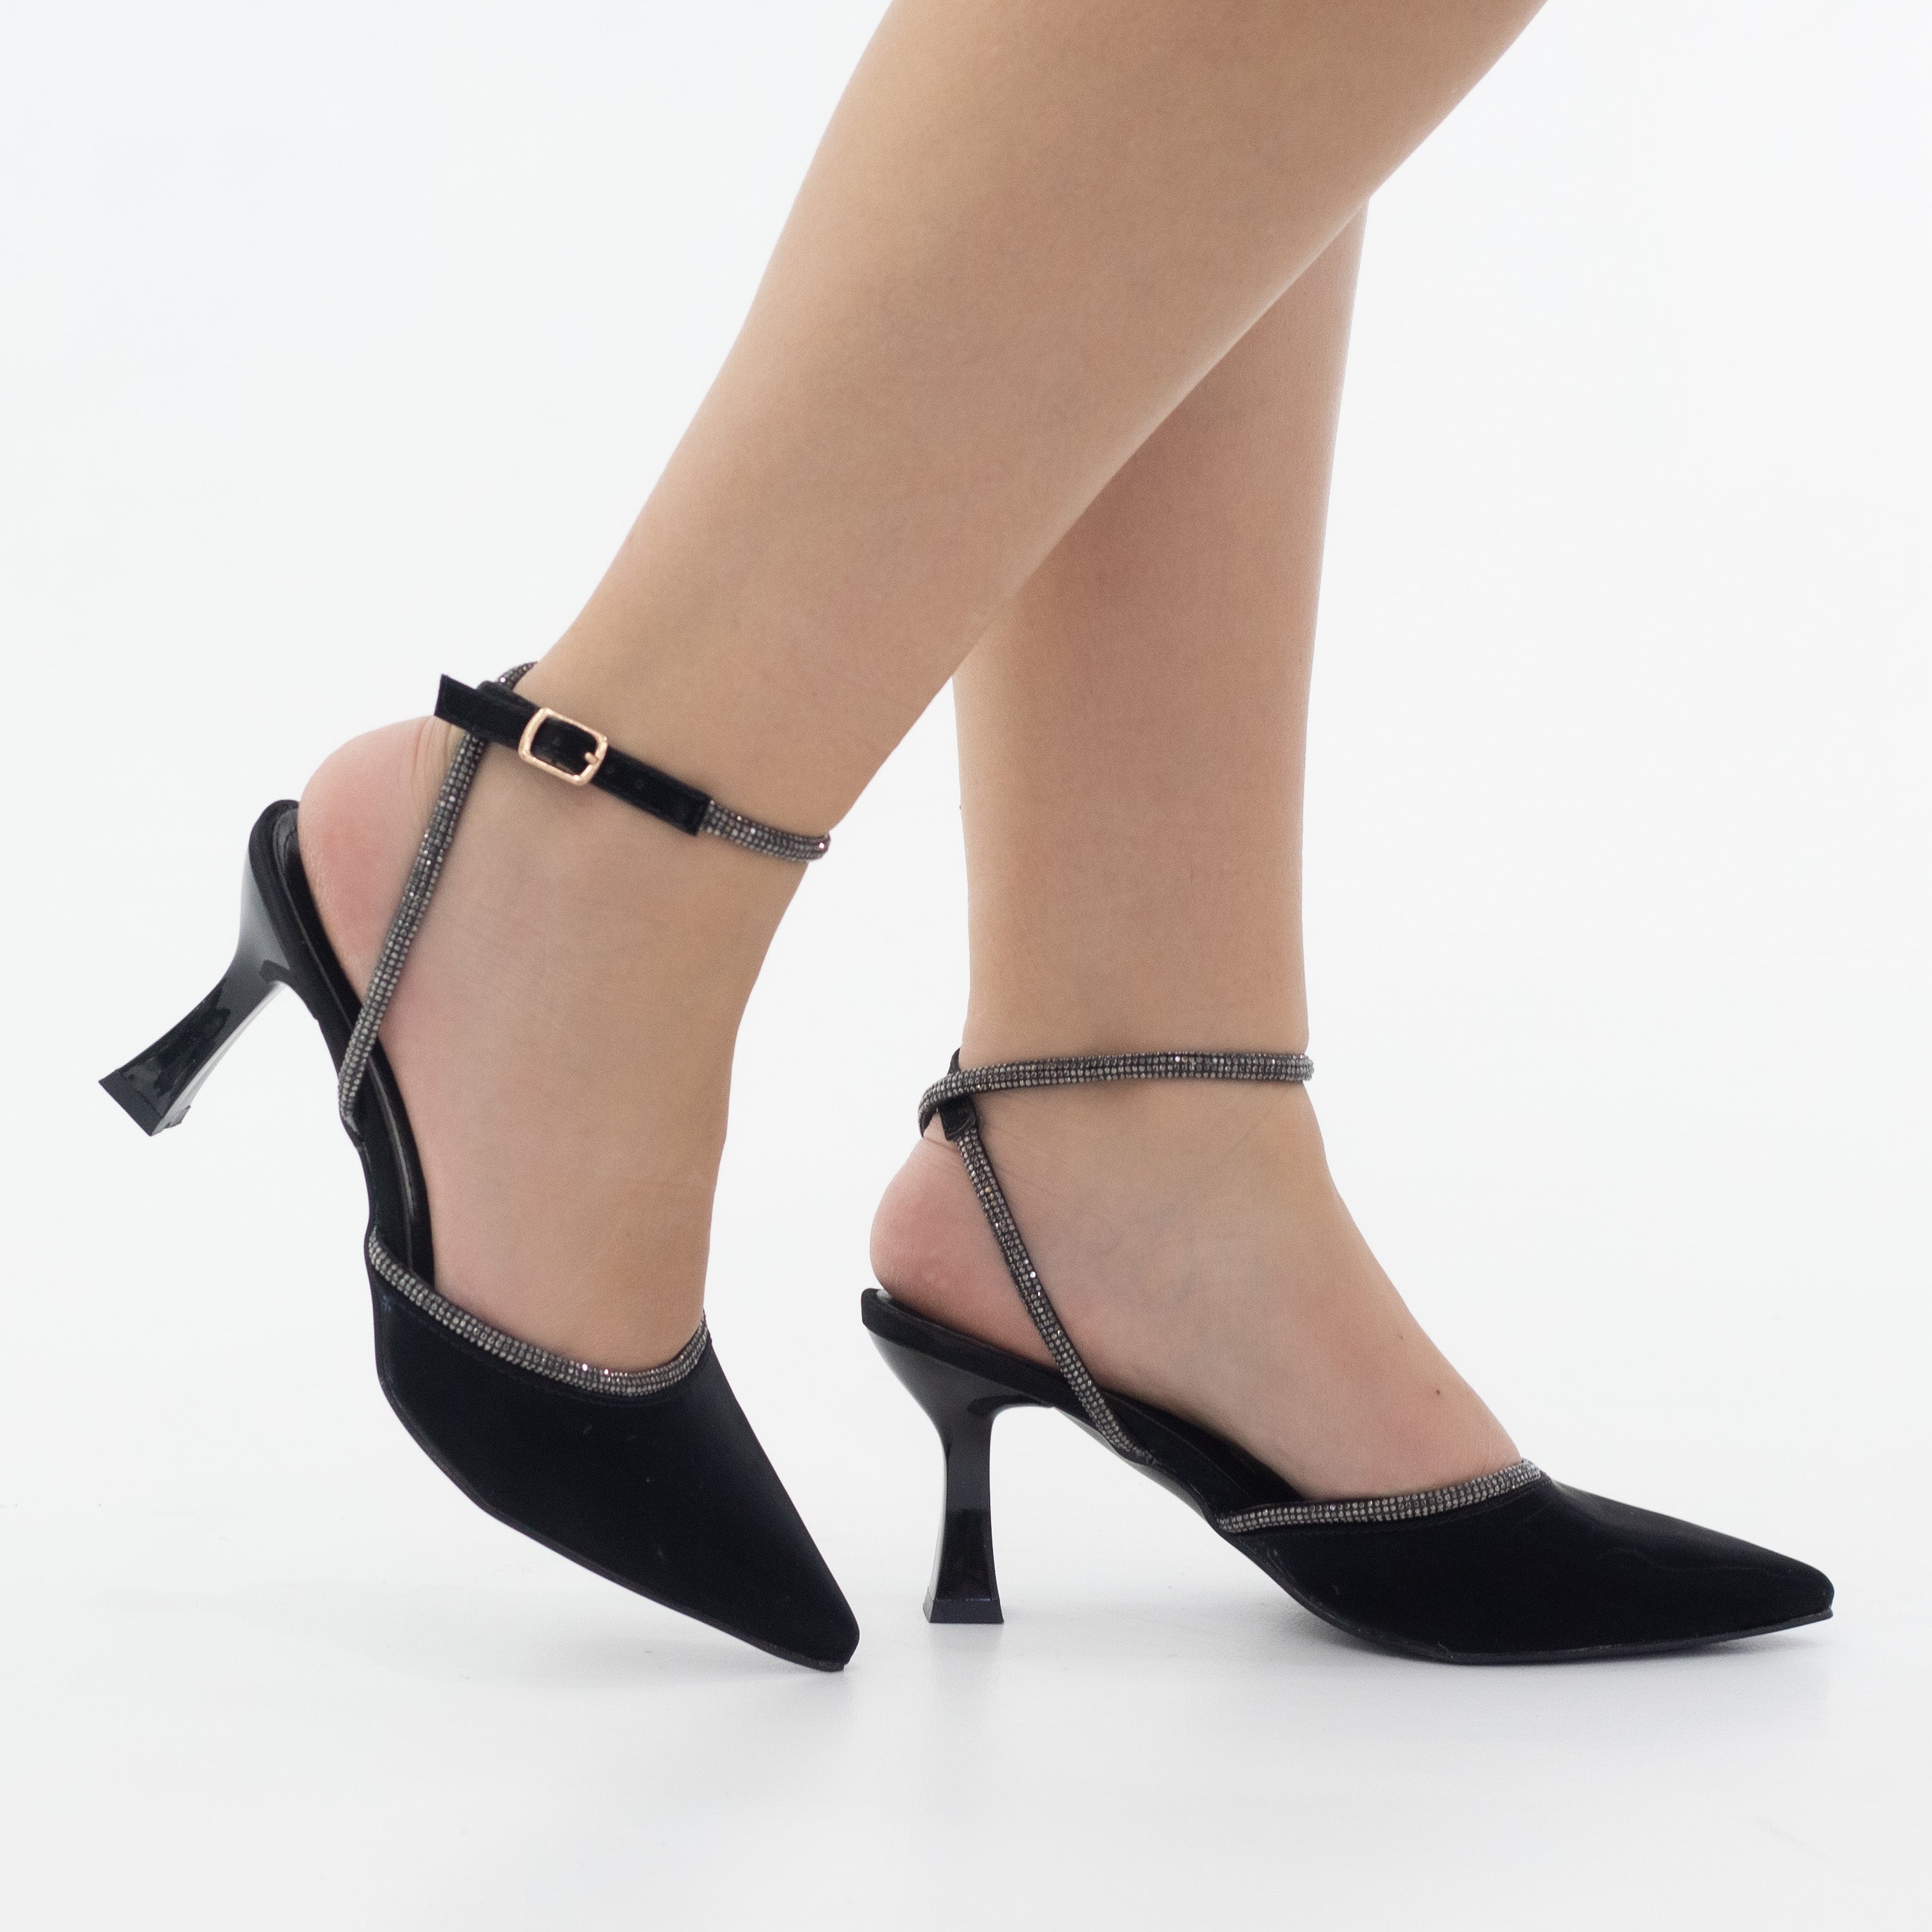 Hamisha embellished with diamante detailed on spool heel black